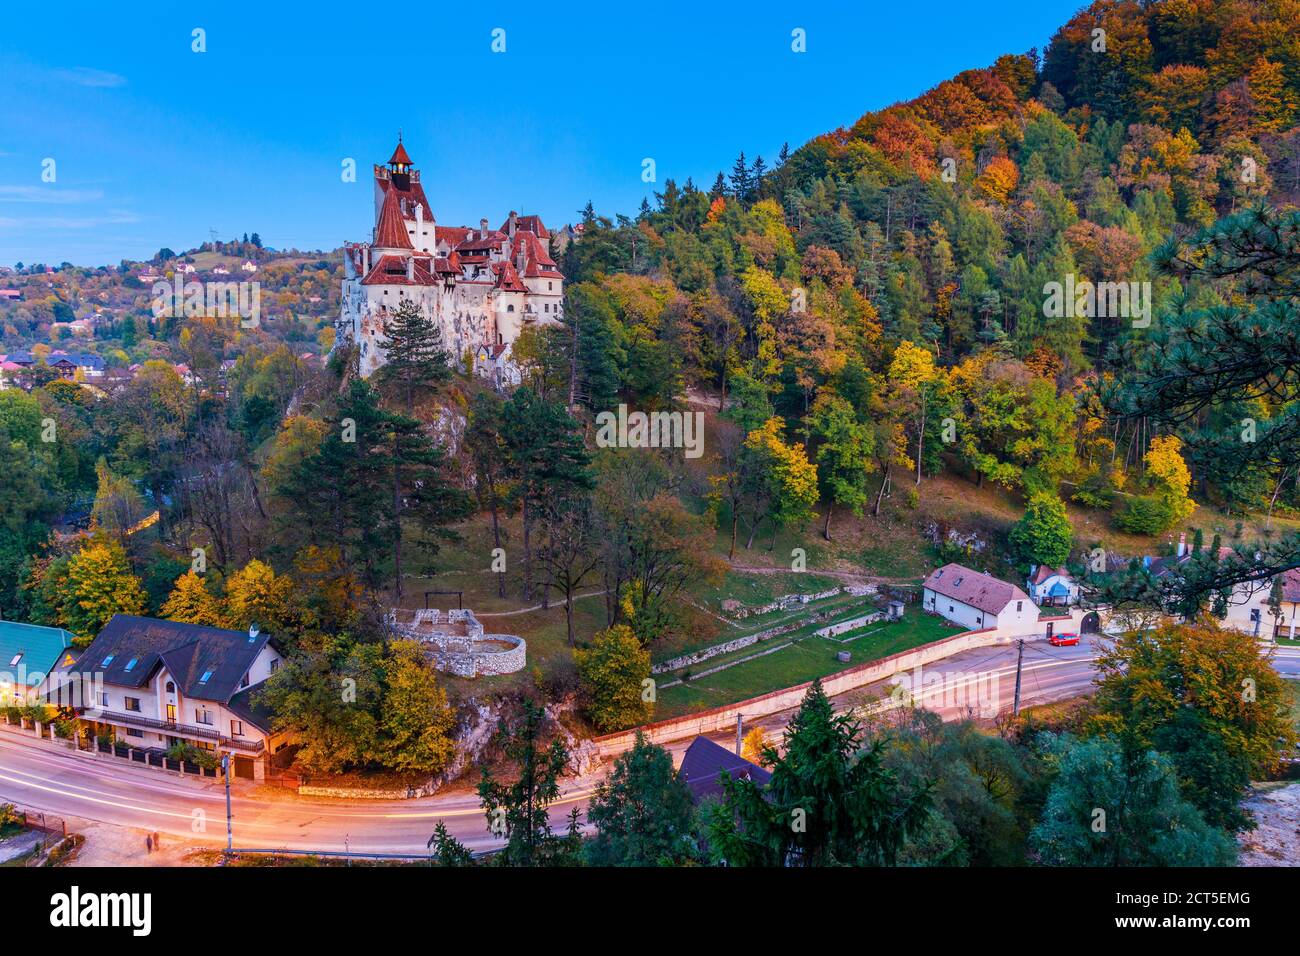 Brasov, Transylvania. Romania. The medieval Castle of Bran, known for the myth of Dracula. Stock Photo